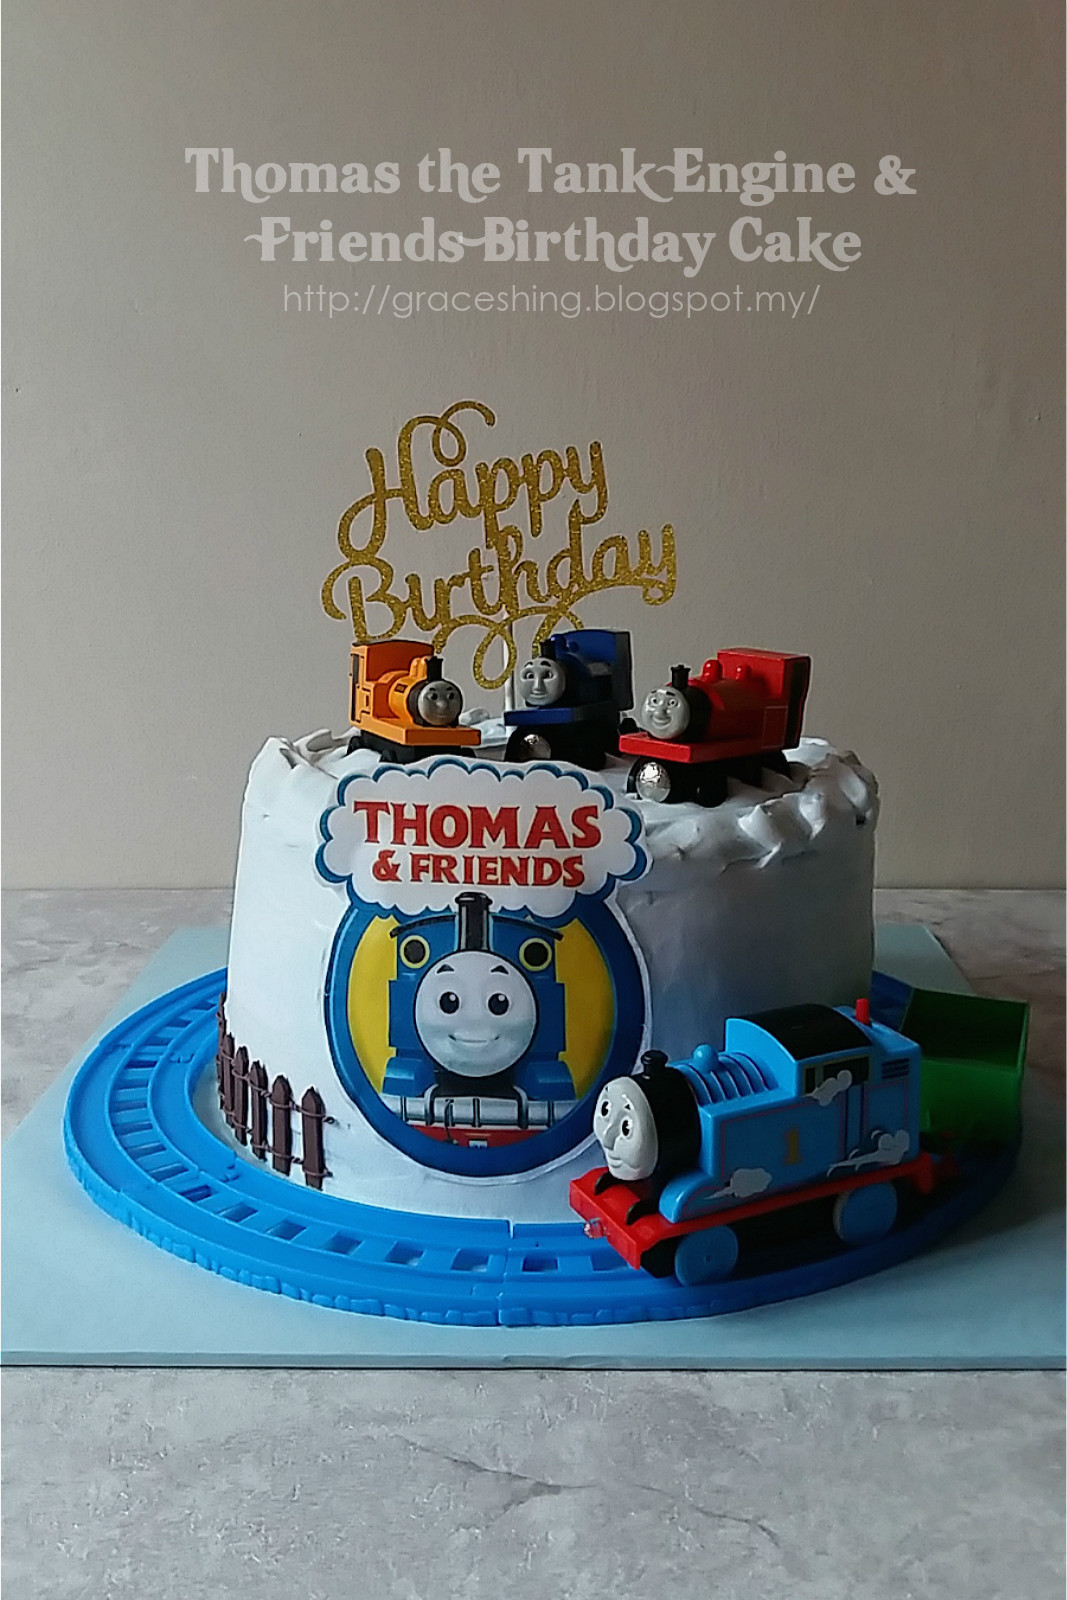 Grace's Blog 欣语心情: 托马斯小火车生日蛋糕 Thomas the Tank Engine & Friends Birthday Cake